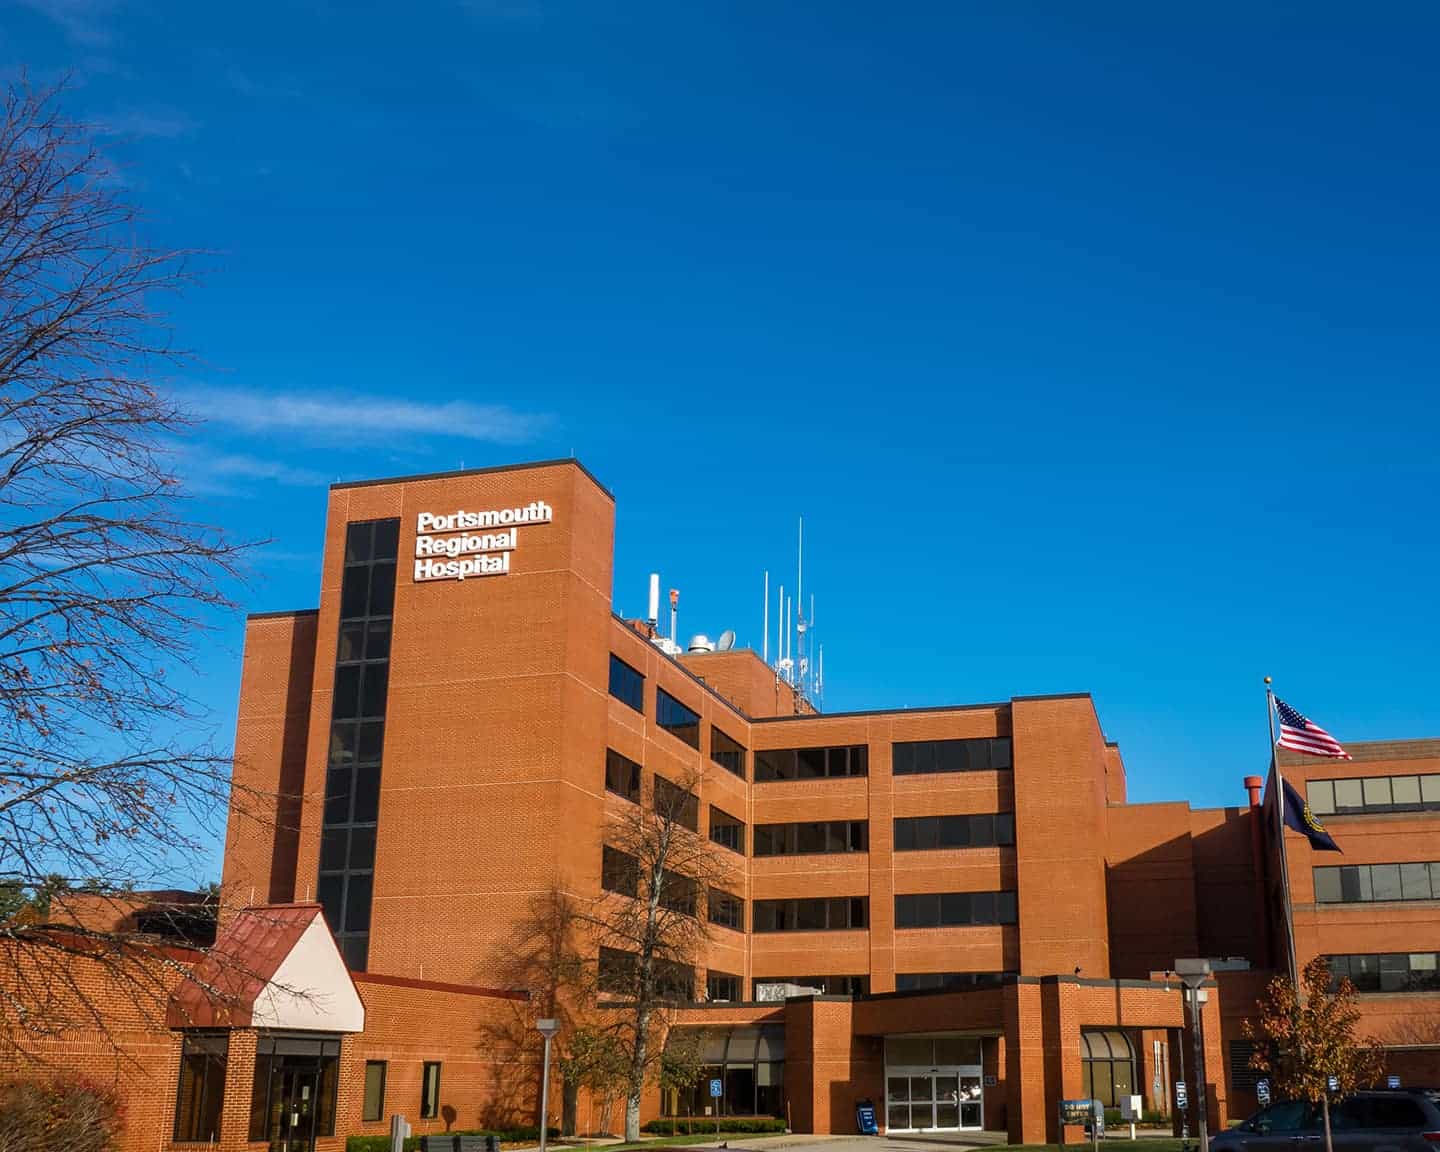 Portsmouth Regional Hospital